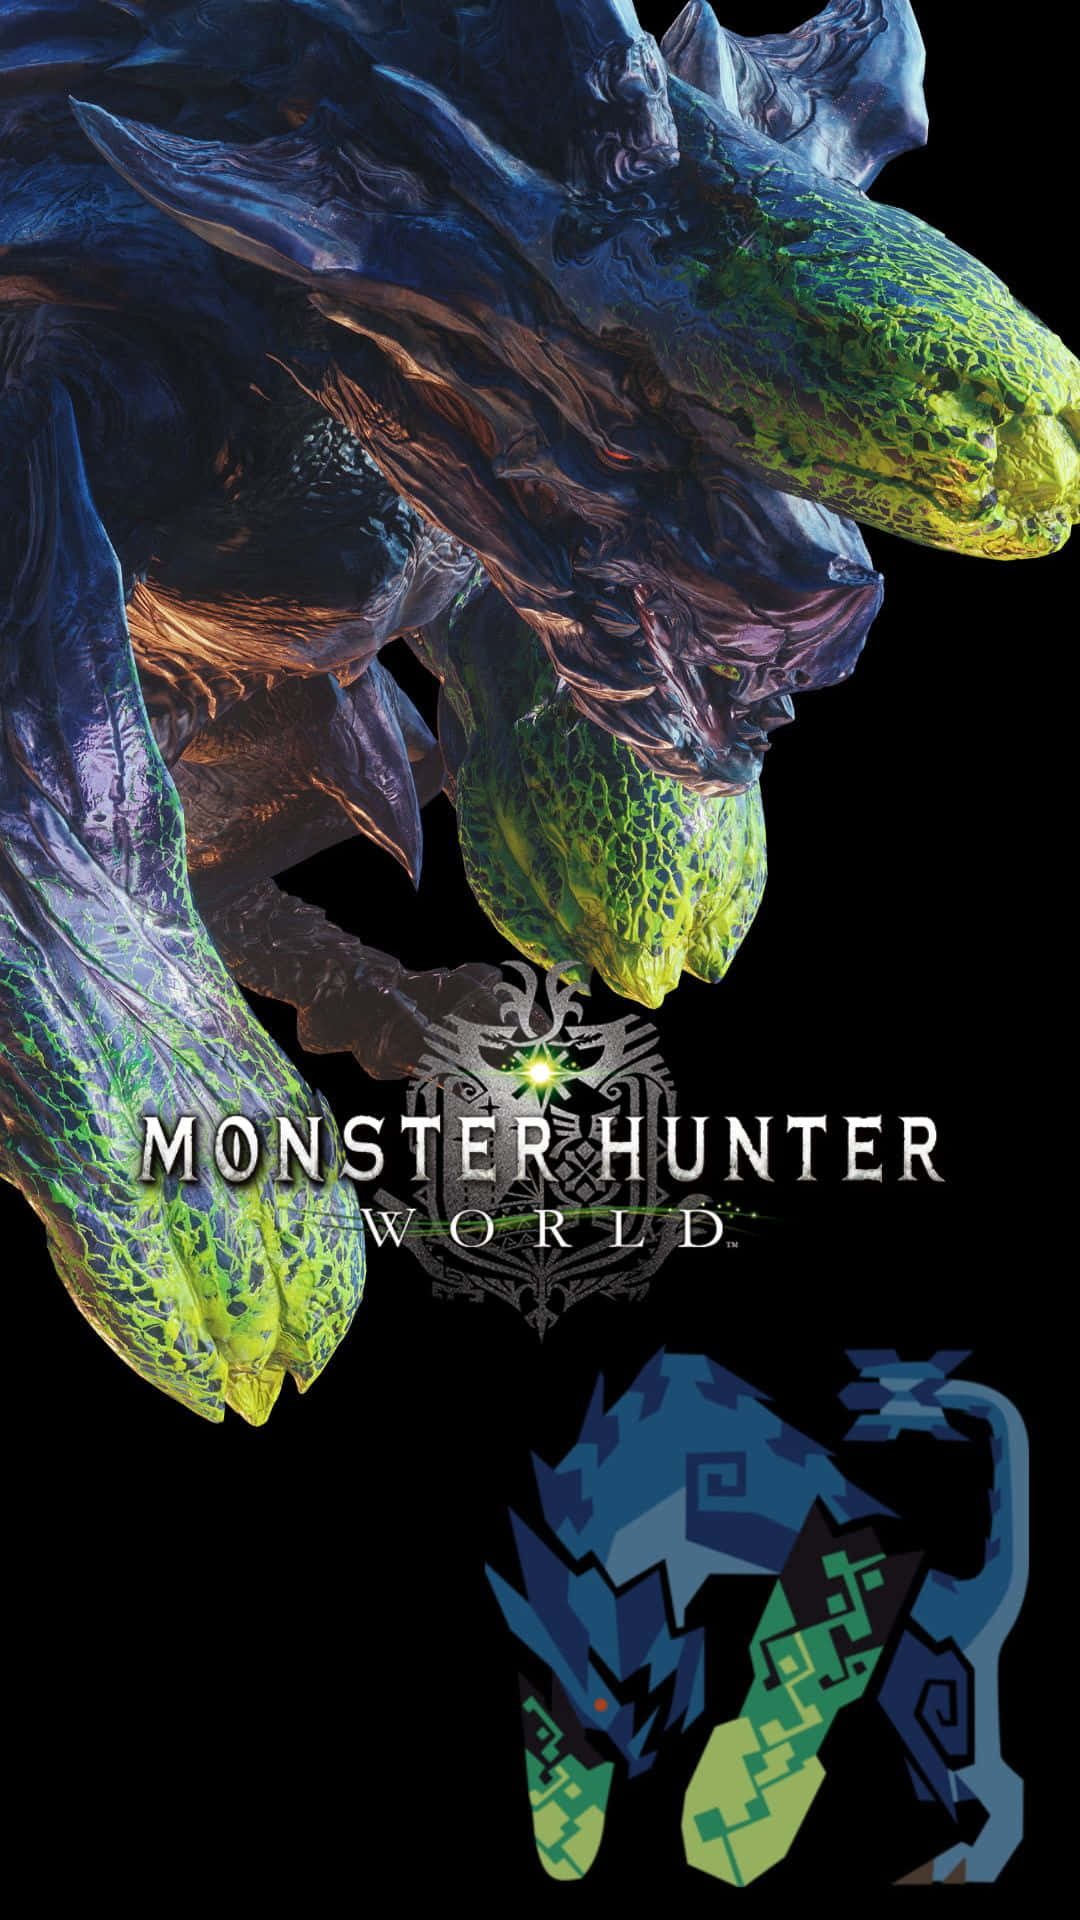 Affrontaavventure Mostruose Con Android Monster Hunter World